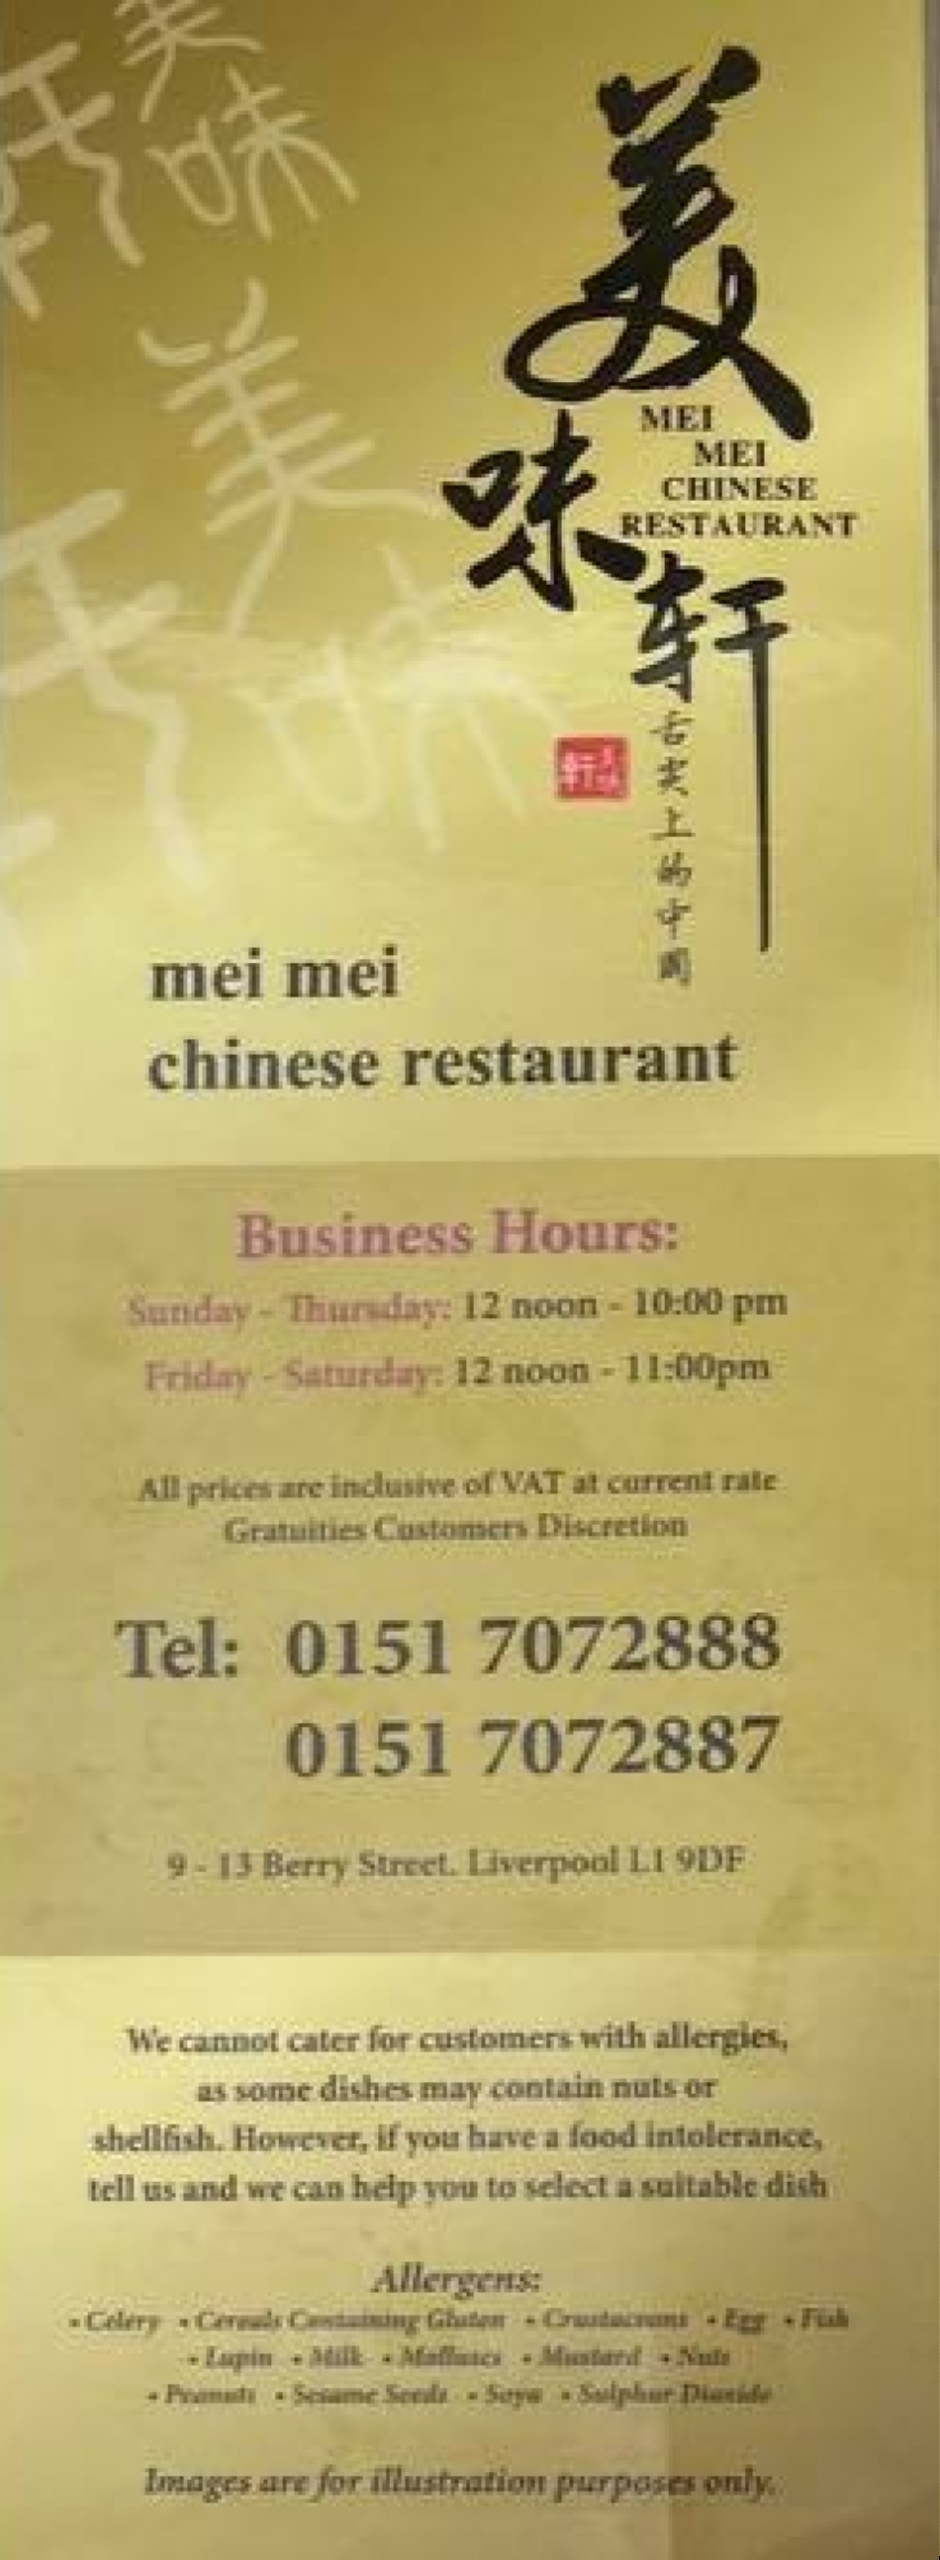 Takeaway Restaurant Menu Page - Mei Mei Chinese Restaurant - Liverpool